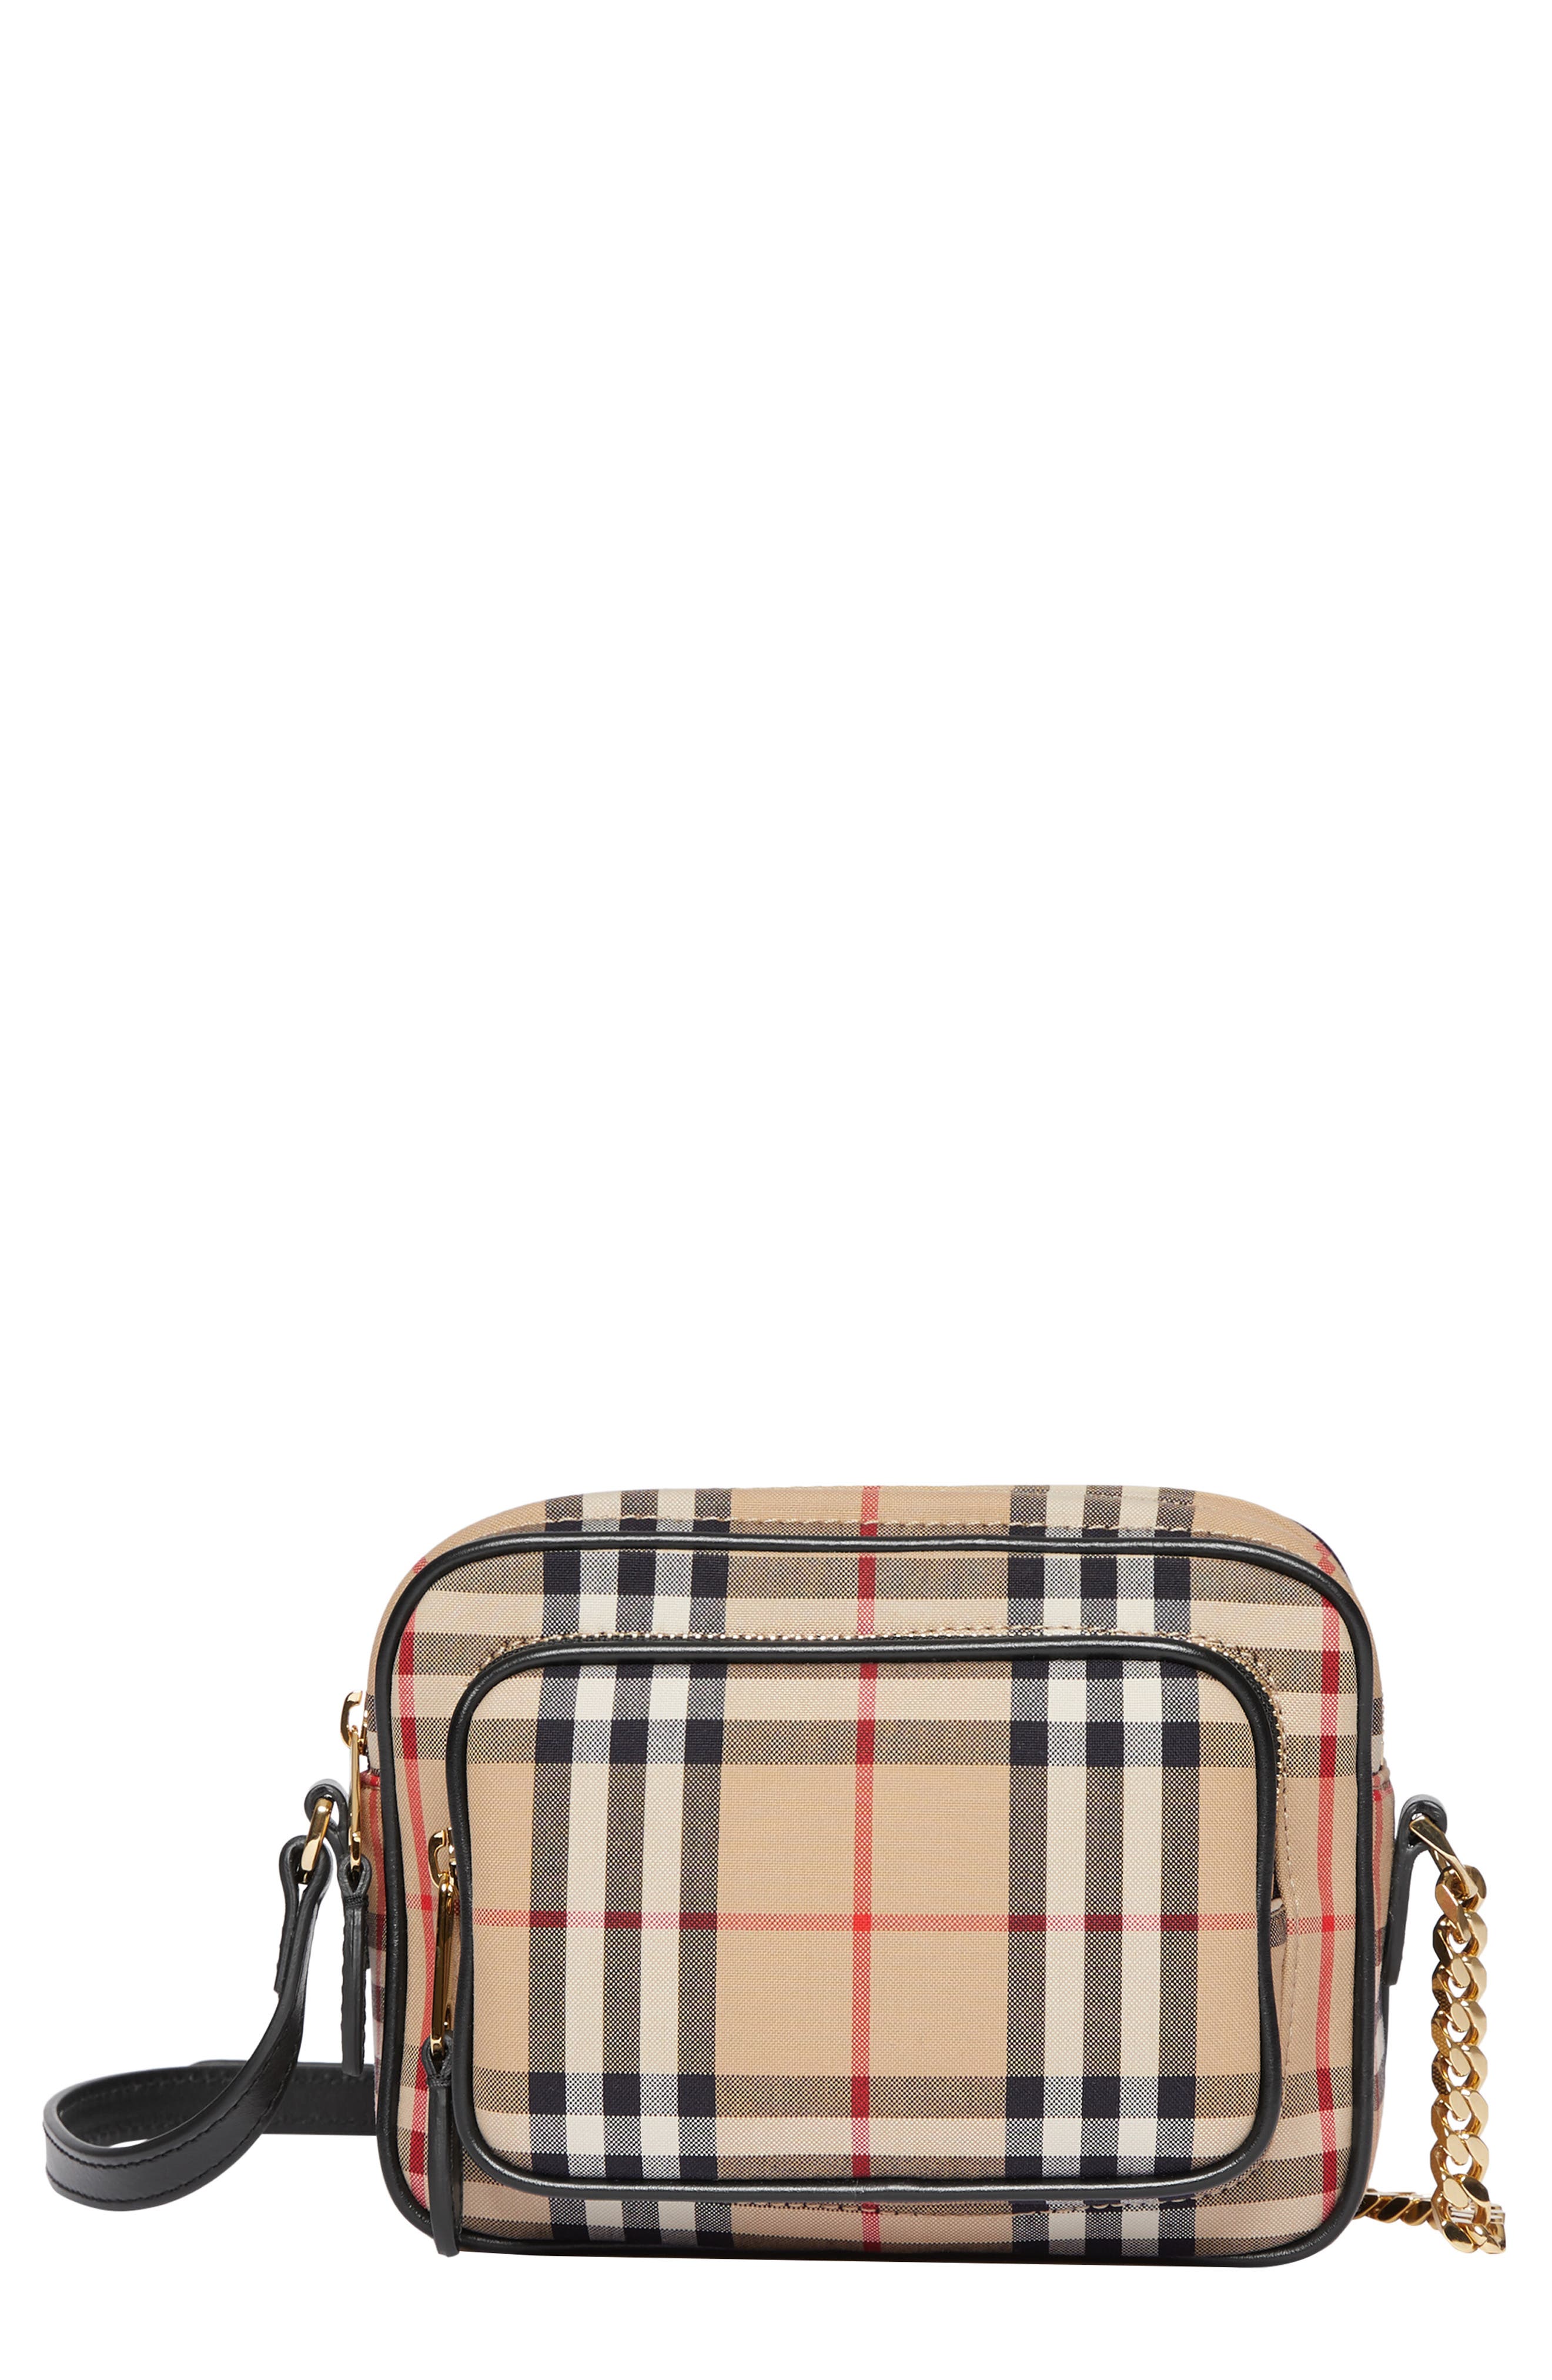 burberry side satchel